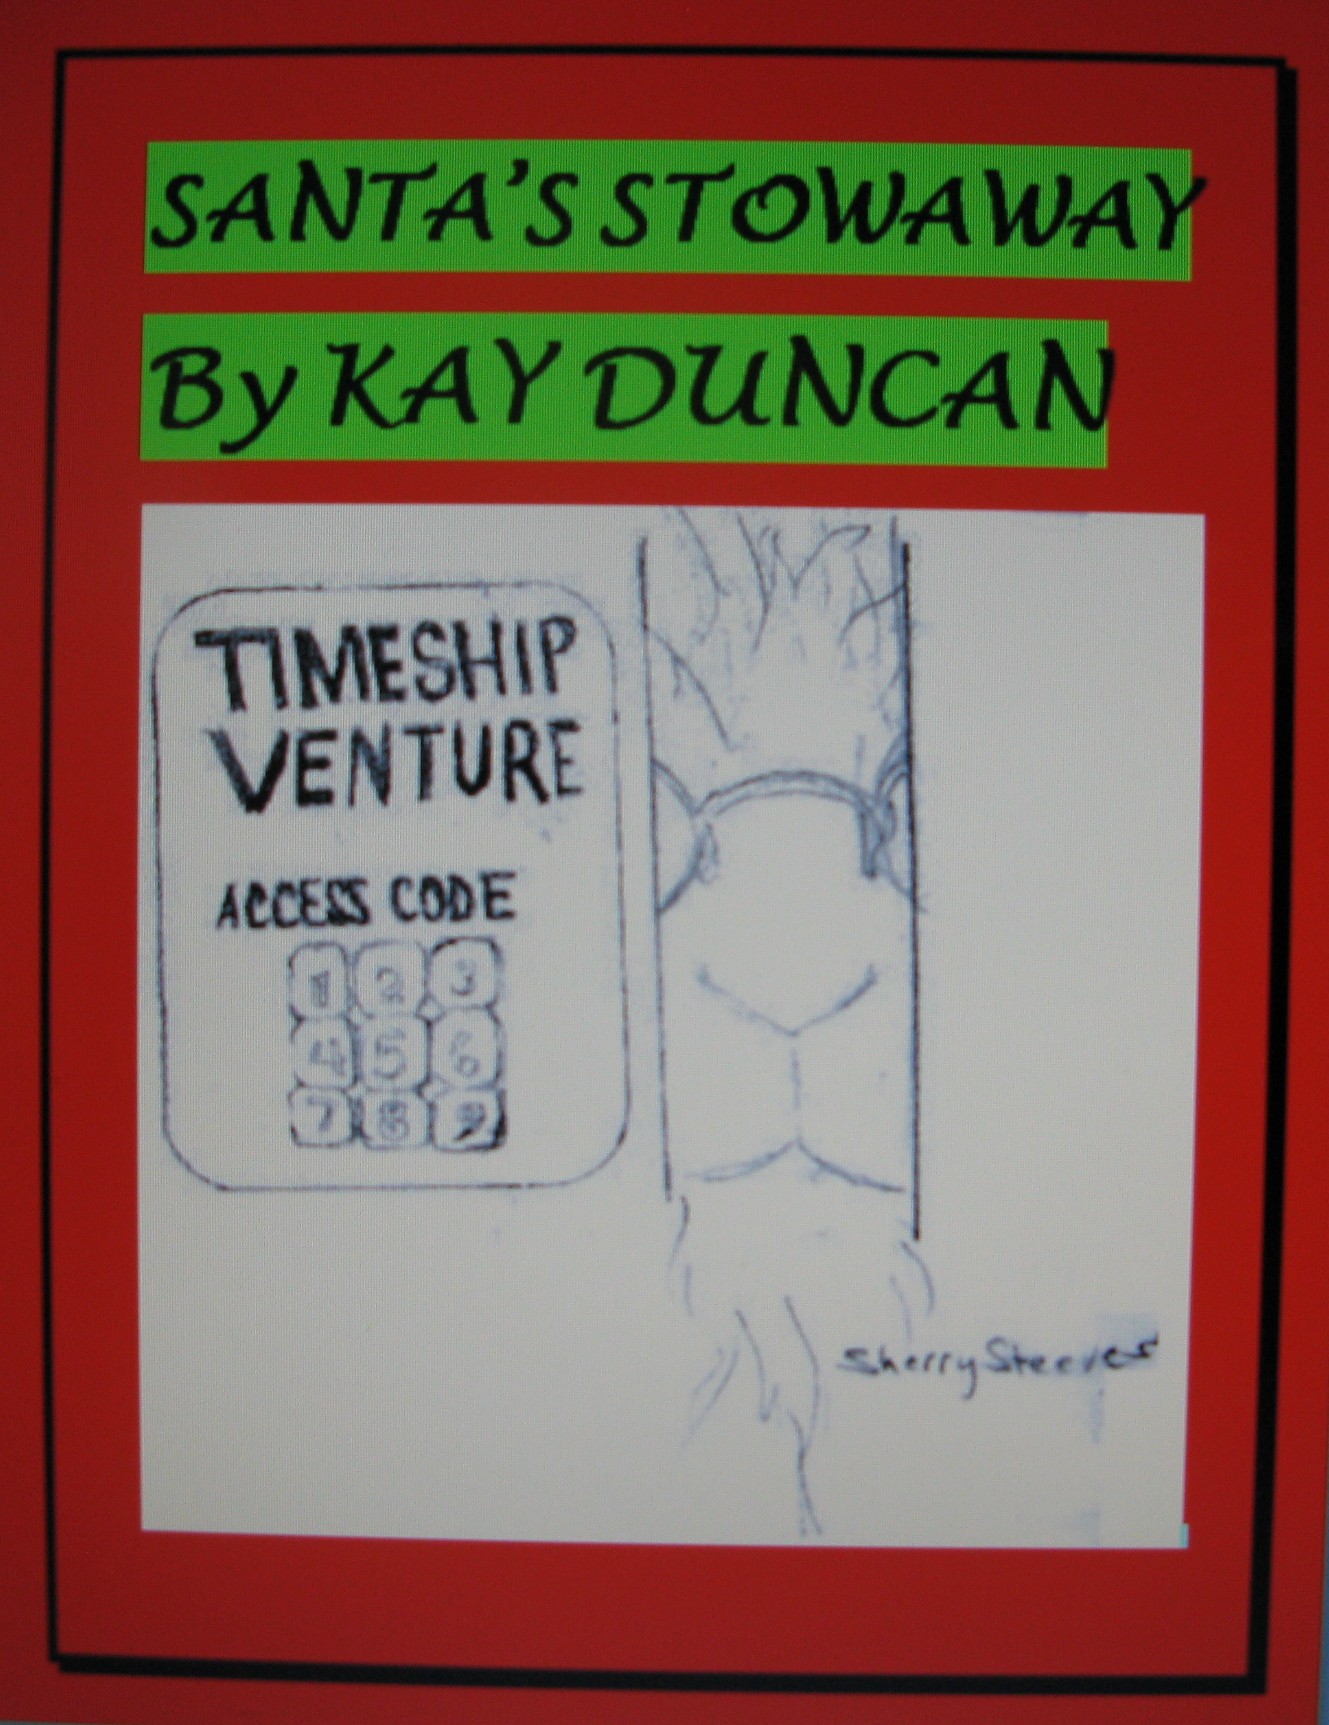 Santa's Stowaway by Kay Duncan